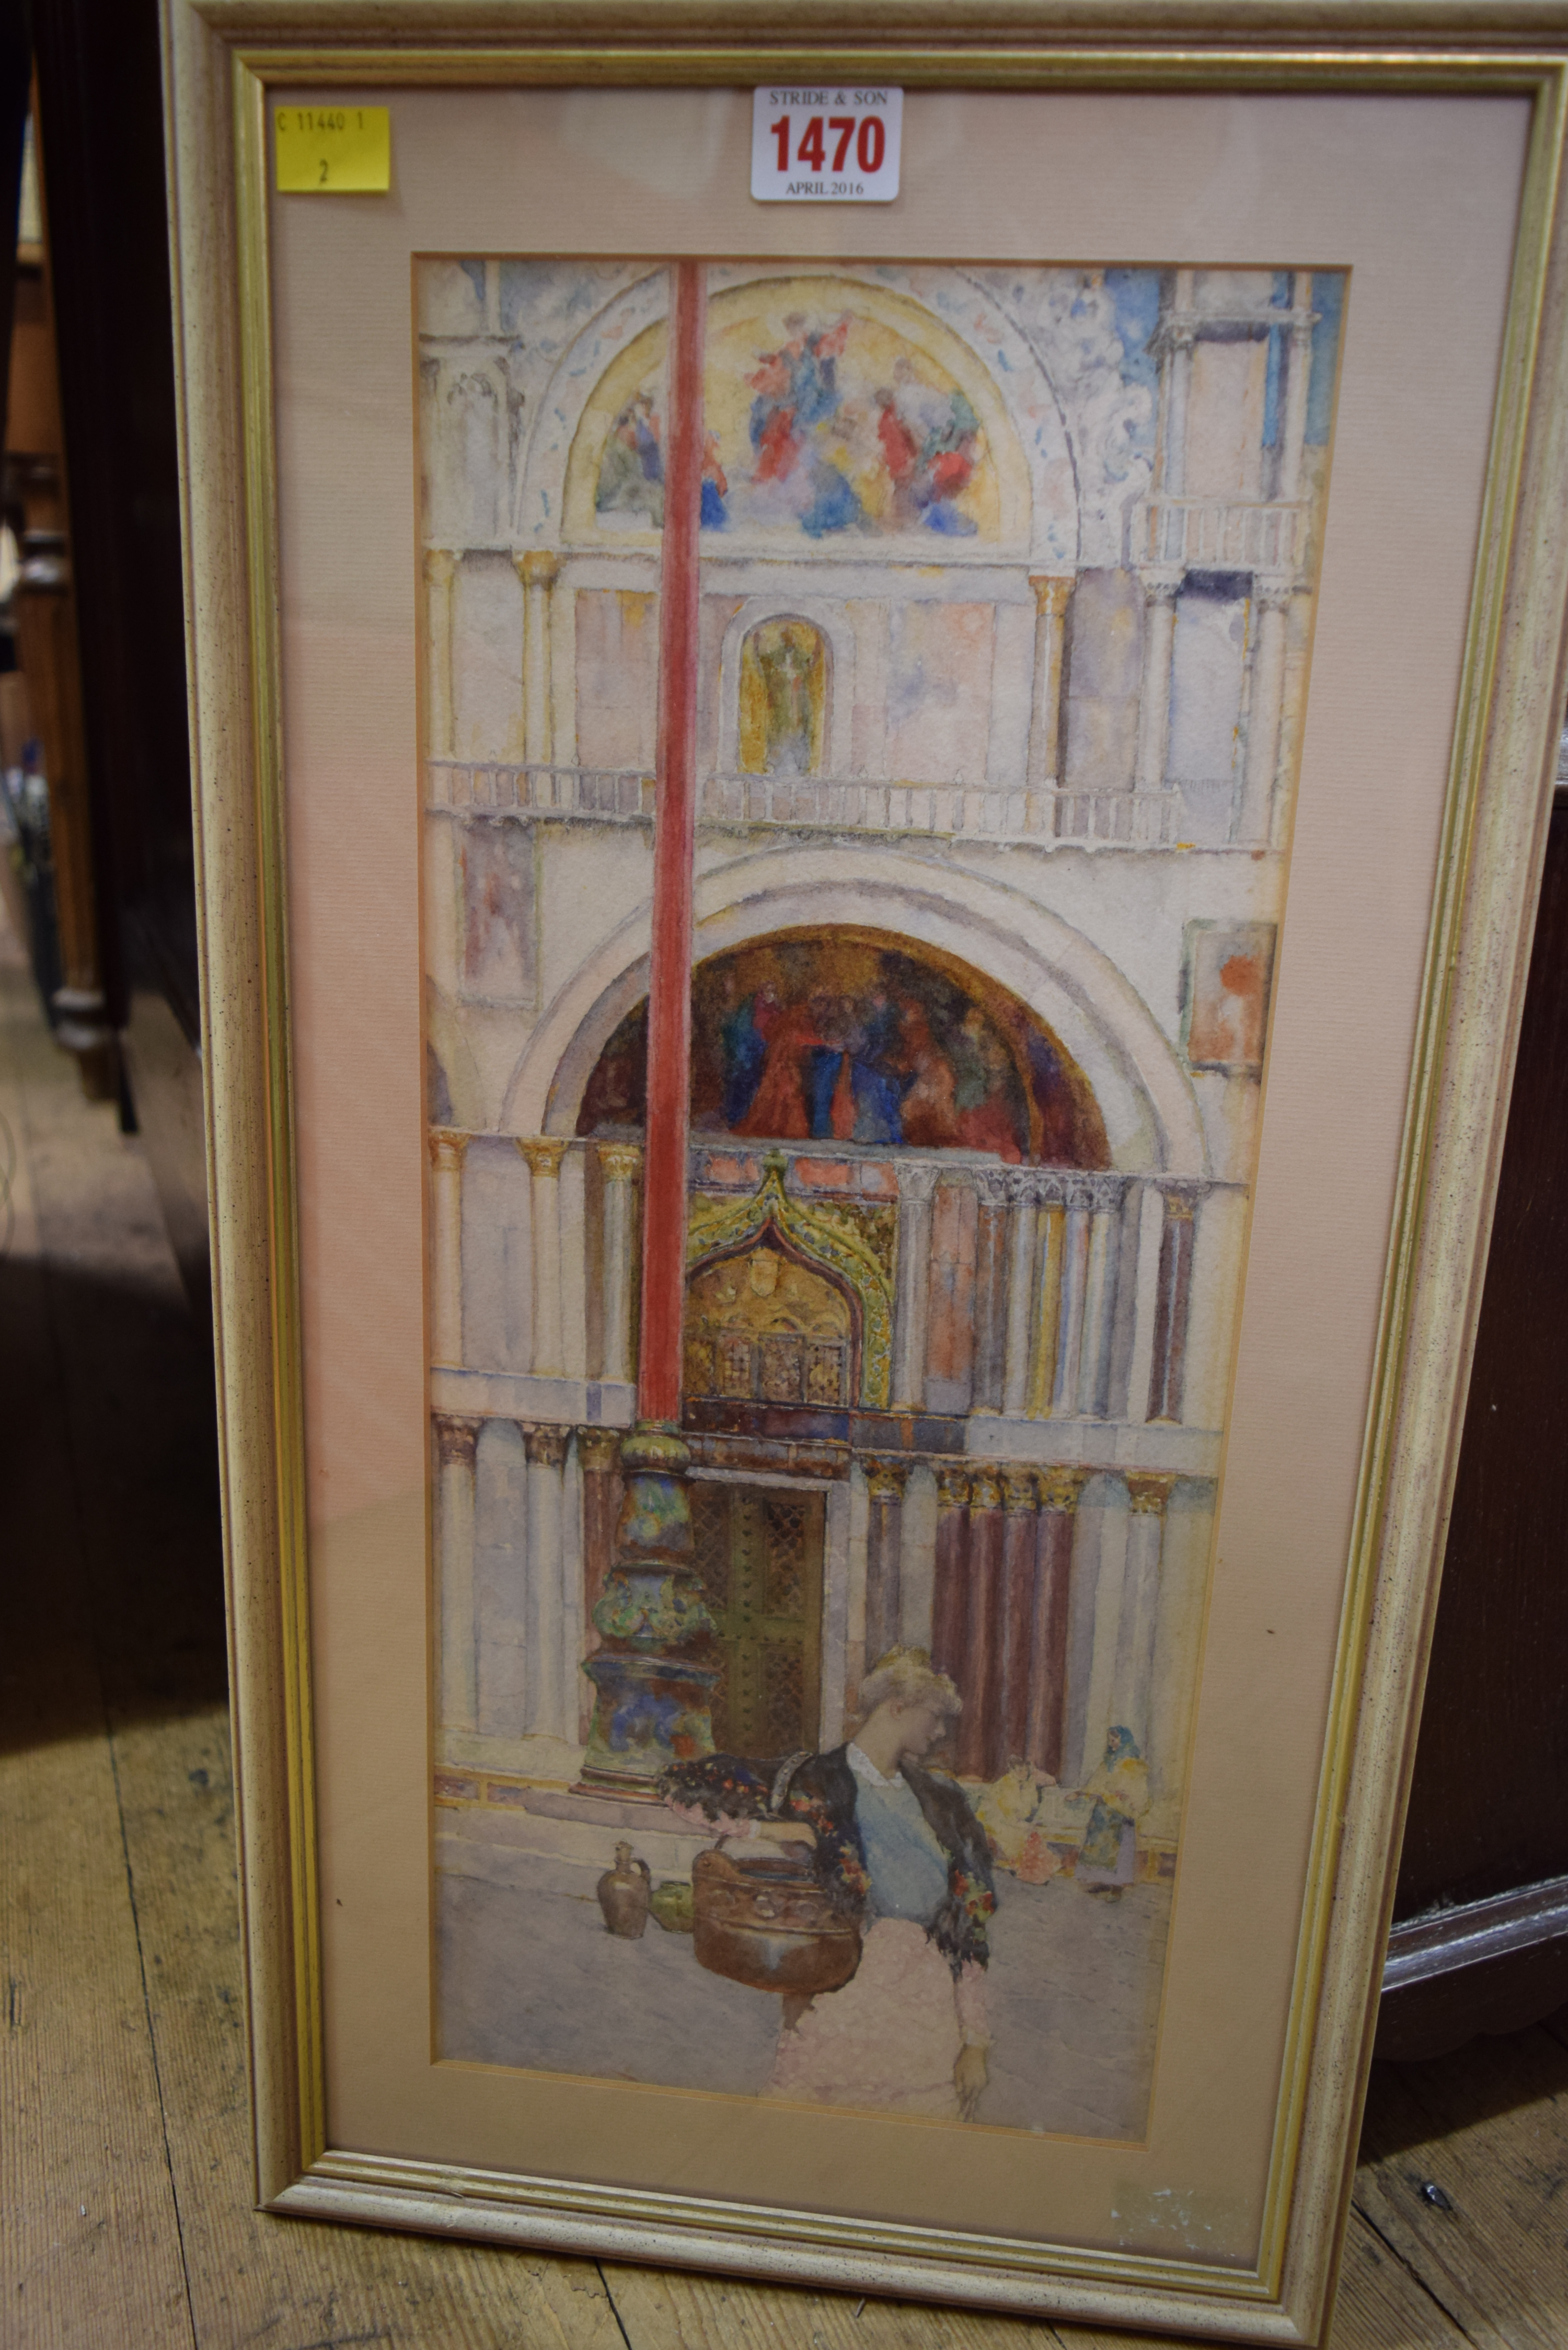 David Woodlock, 'St Mark's Square,Venice', signed, watercolour, 46.5 x 20cm.